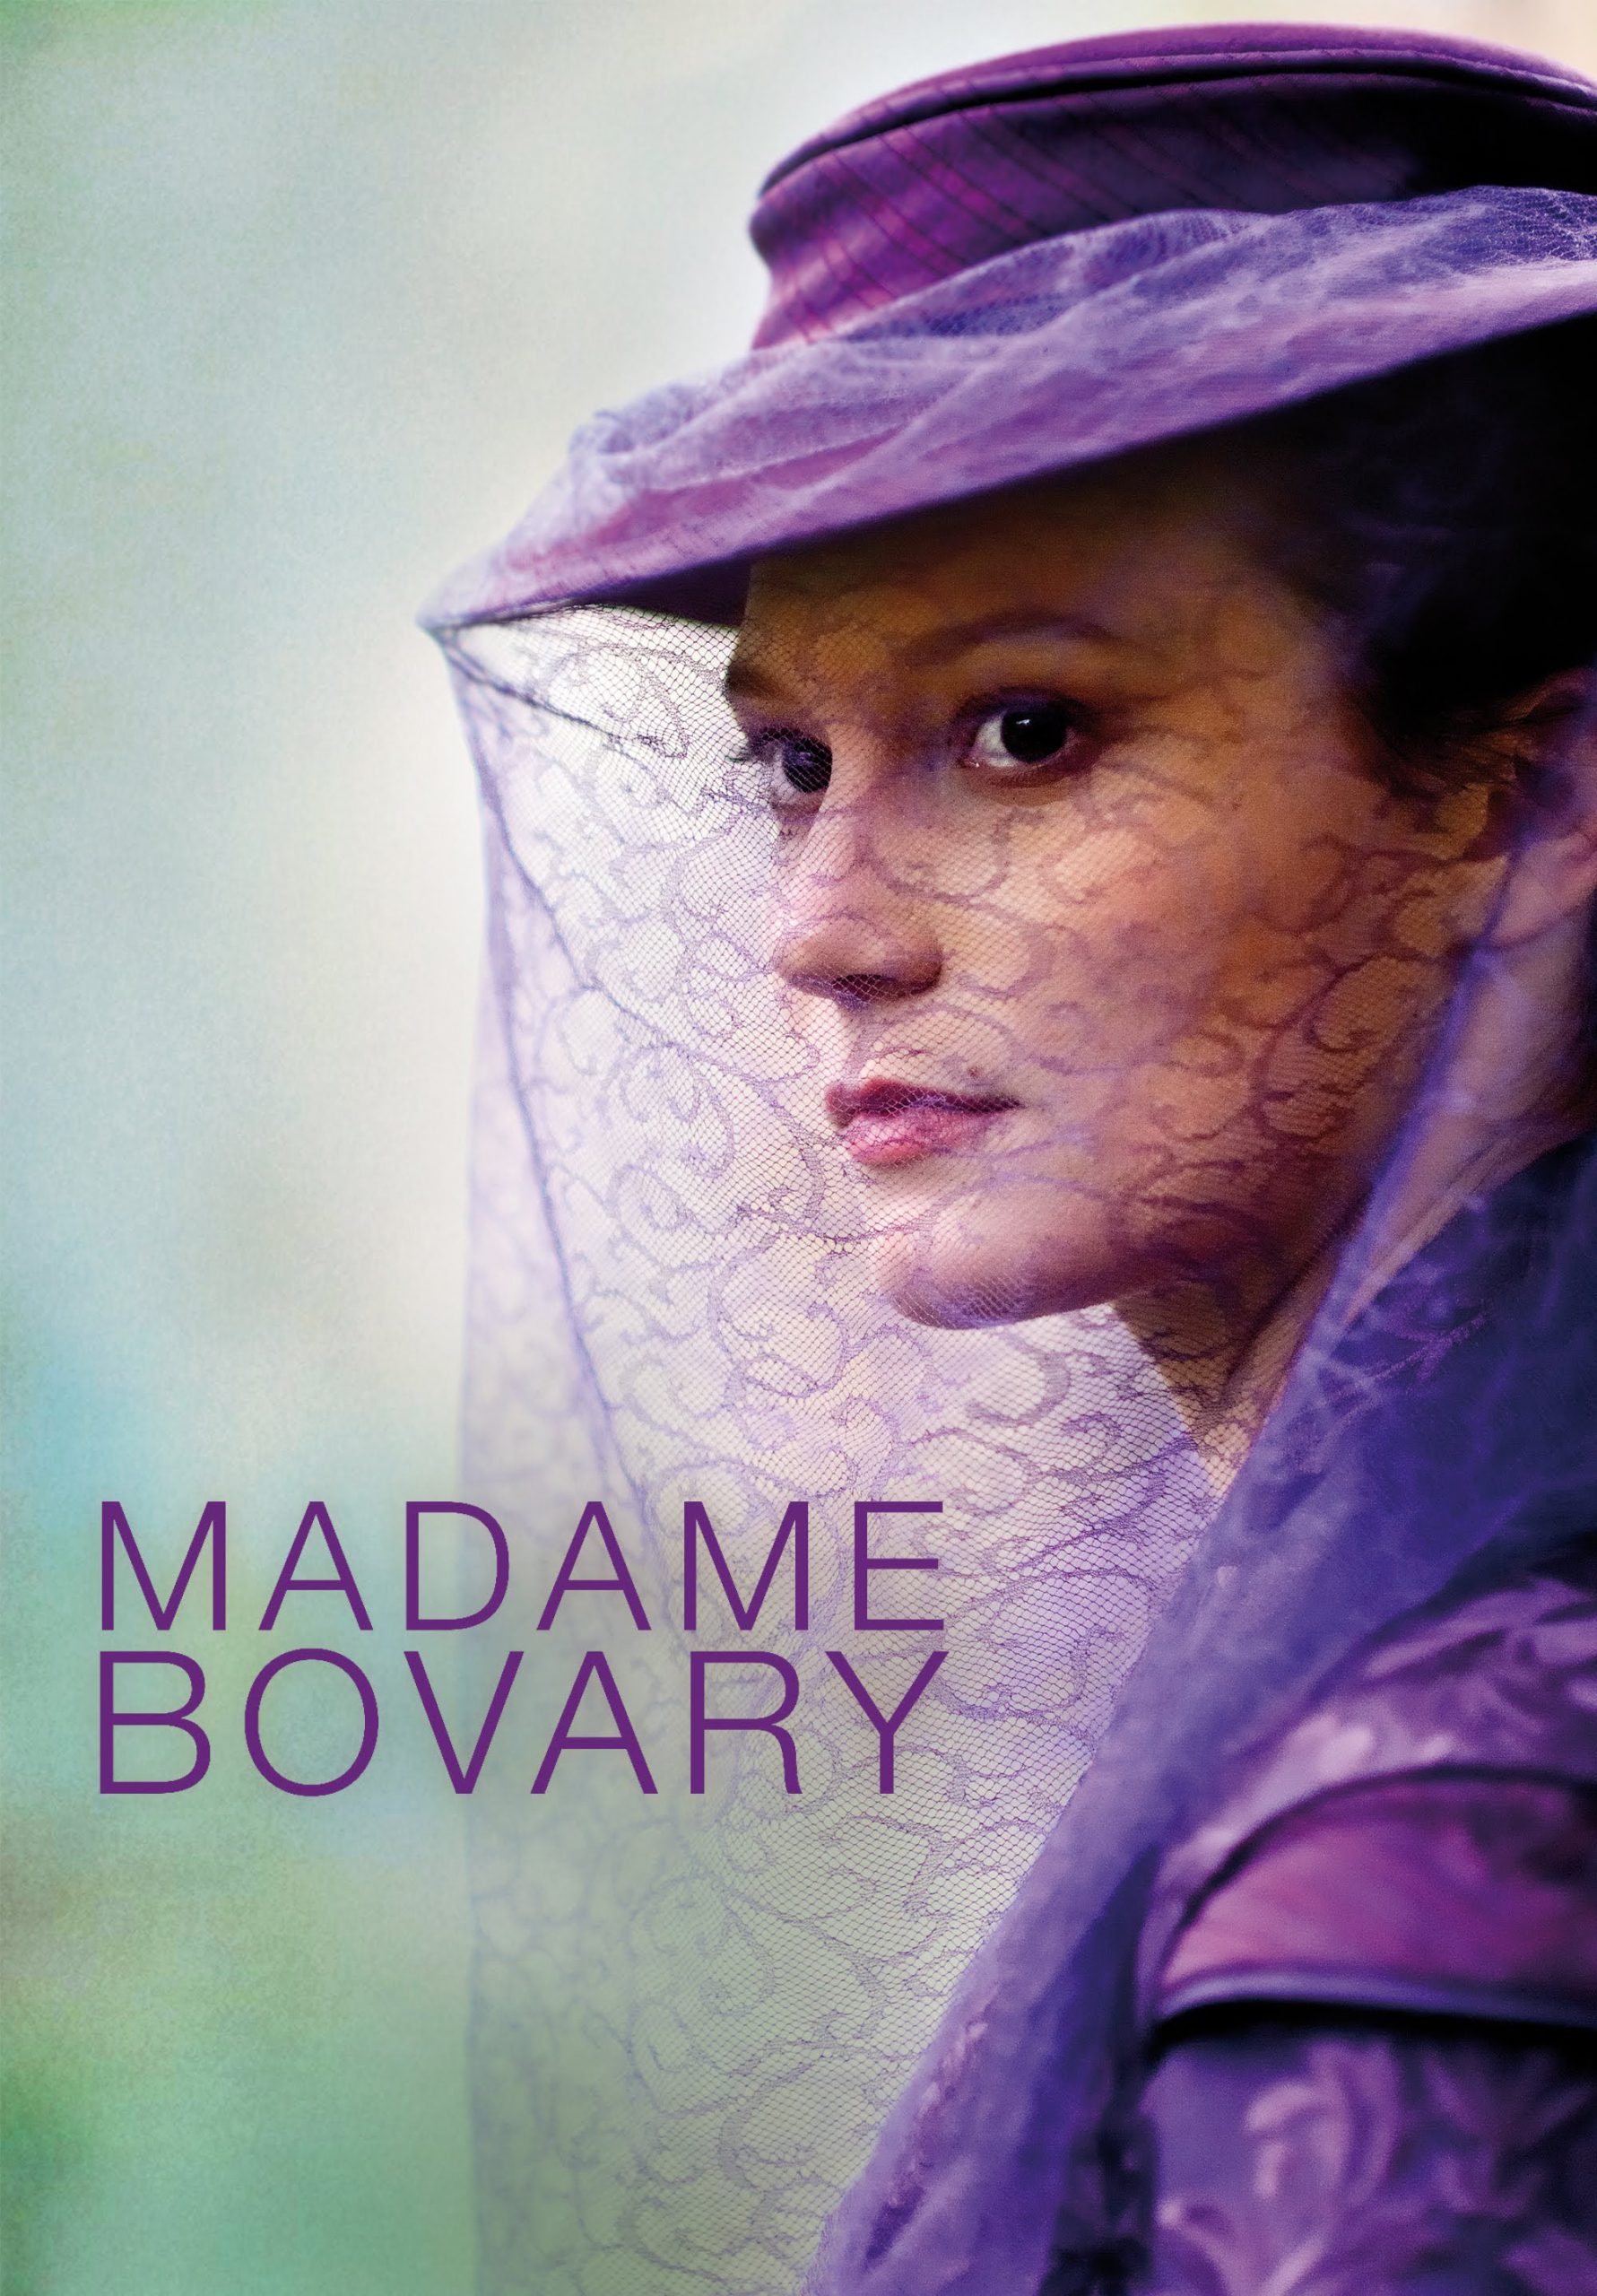 Madame Bovary [HD] (2015)